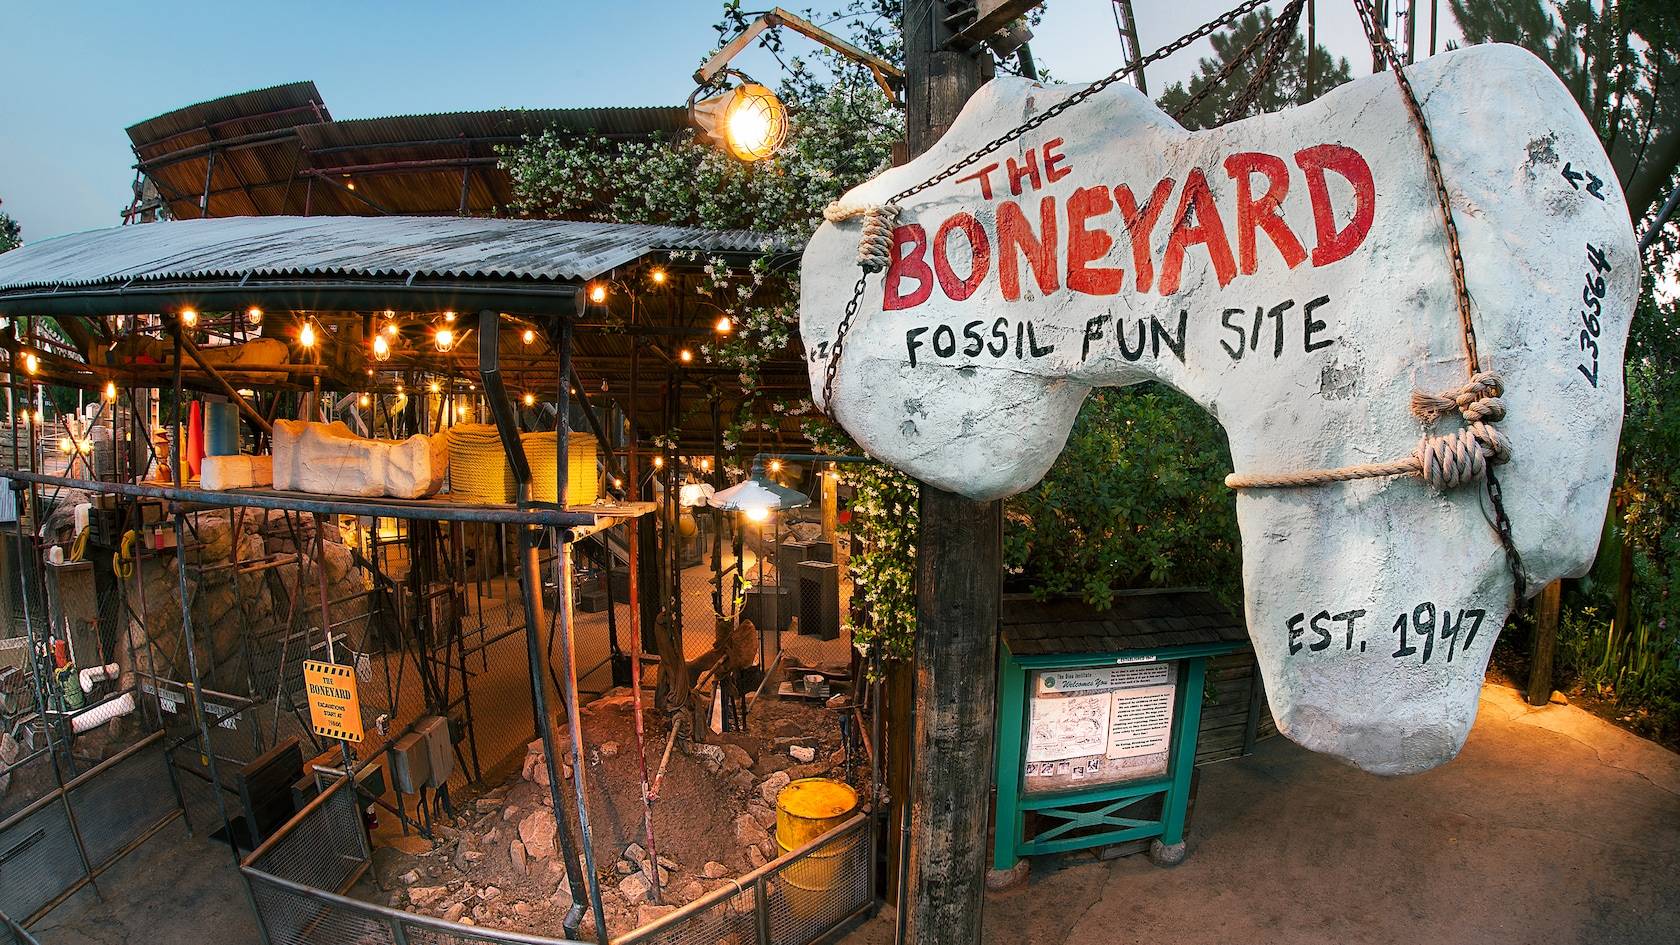 Newly refurbished Boneyard playground reopens at Disney's Animal Kingdom